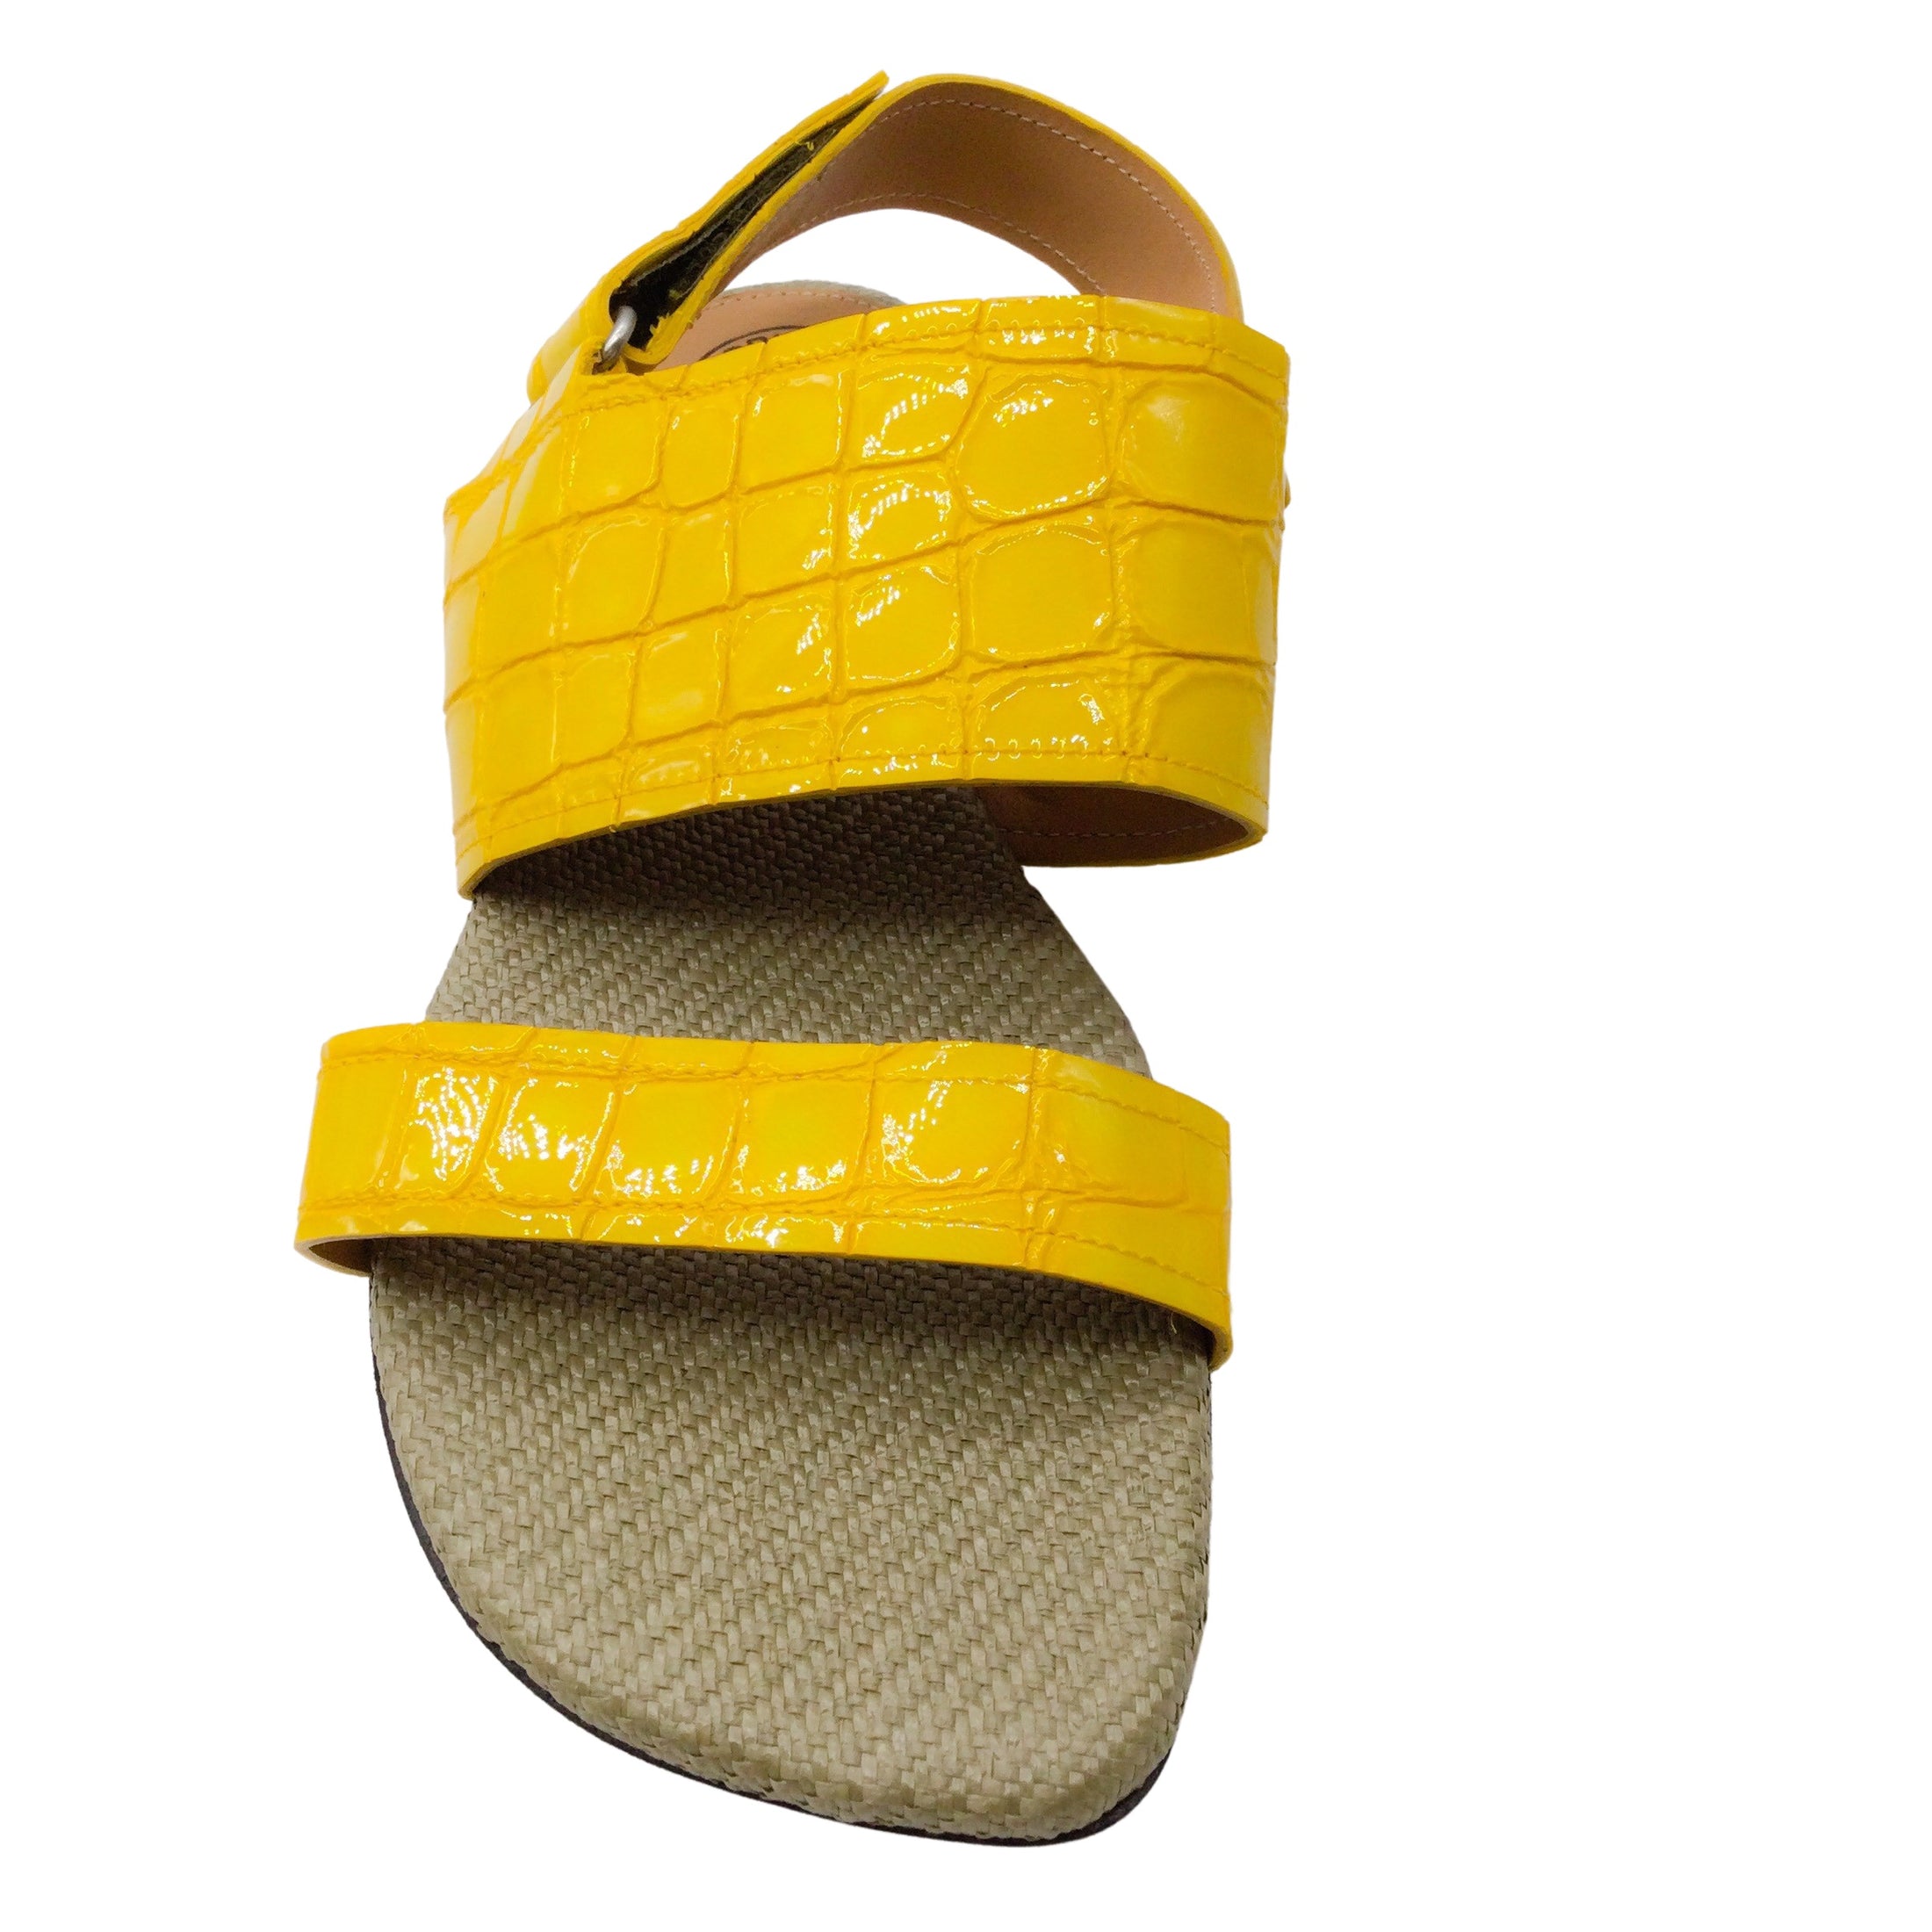 Dries van Noten Yellow Croc Embossed Patent Leather Flat Sandals